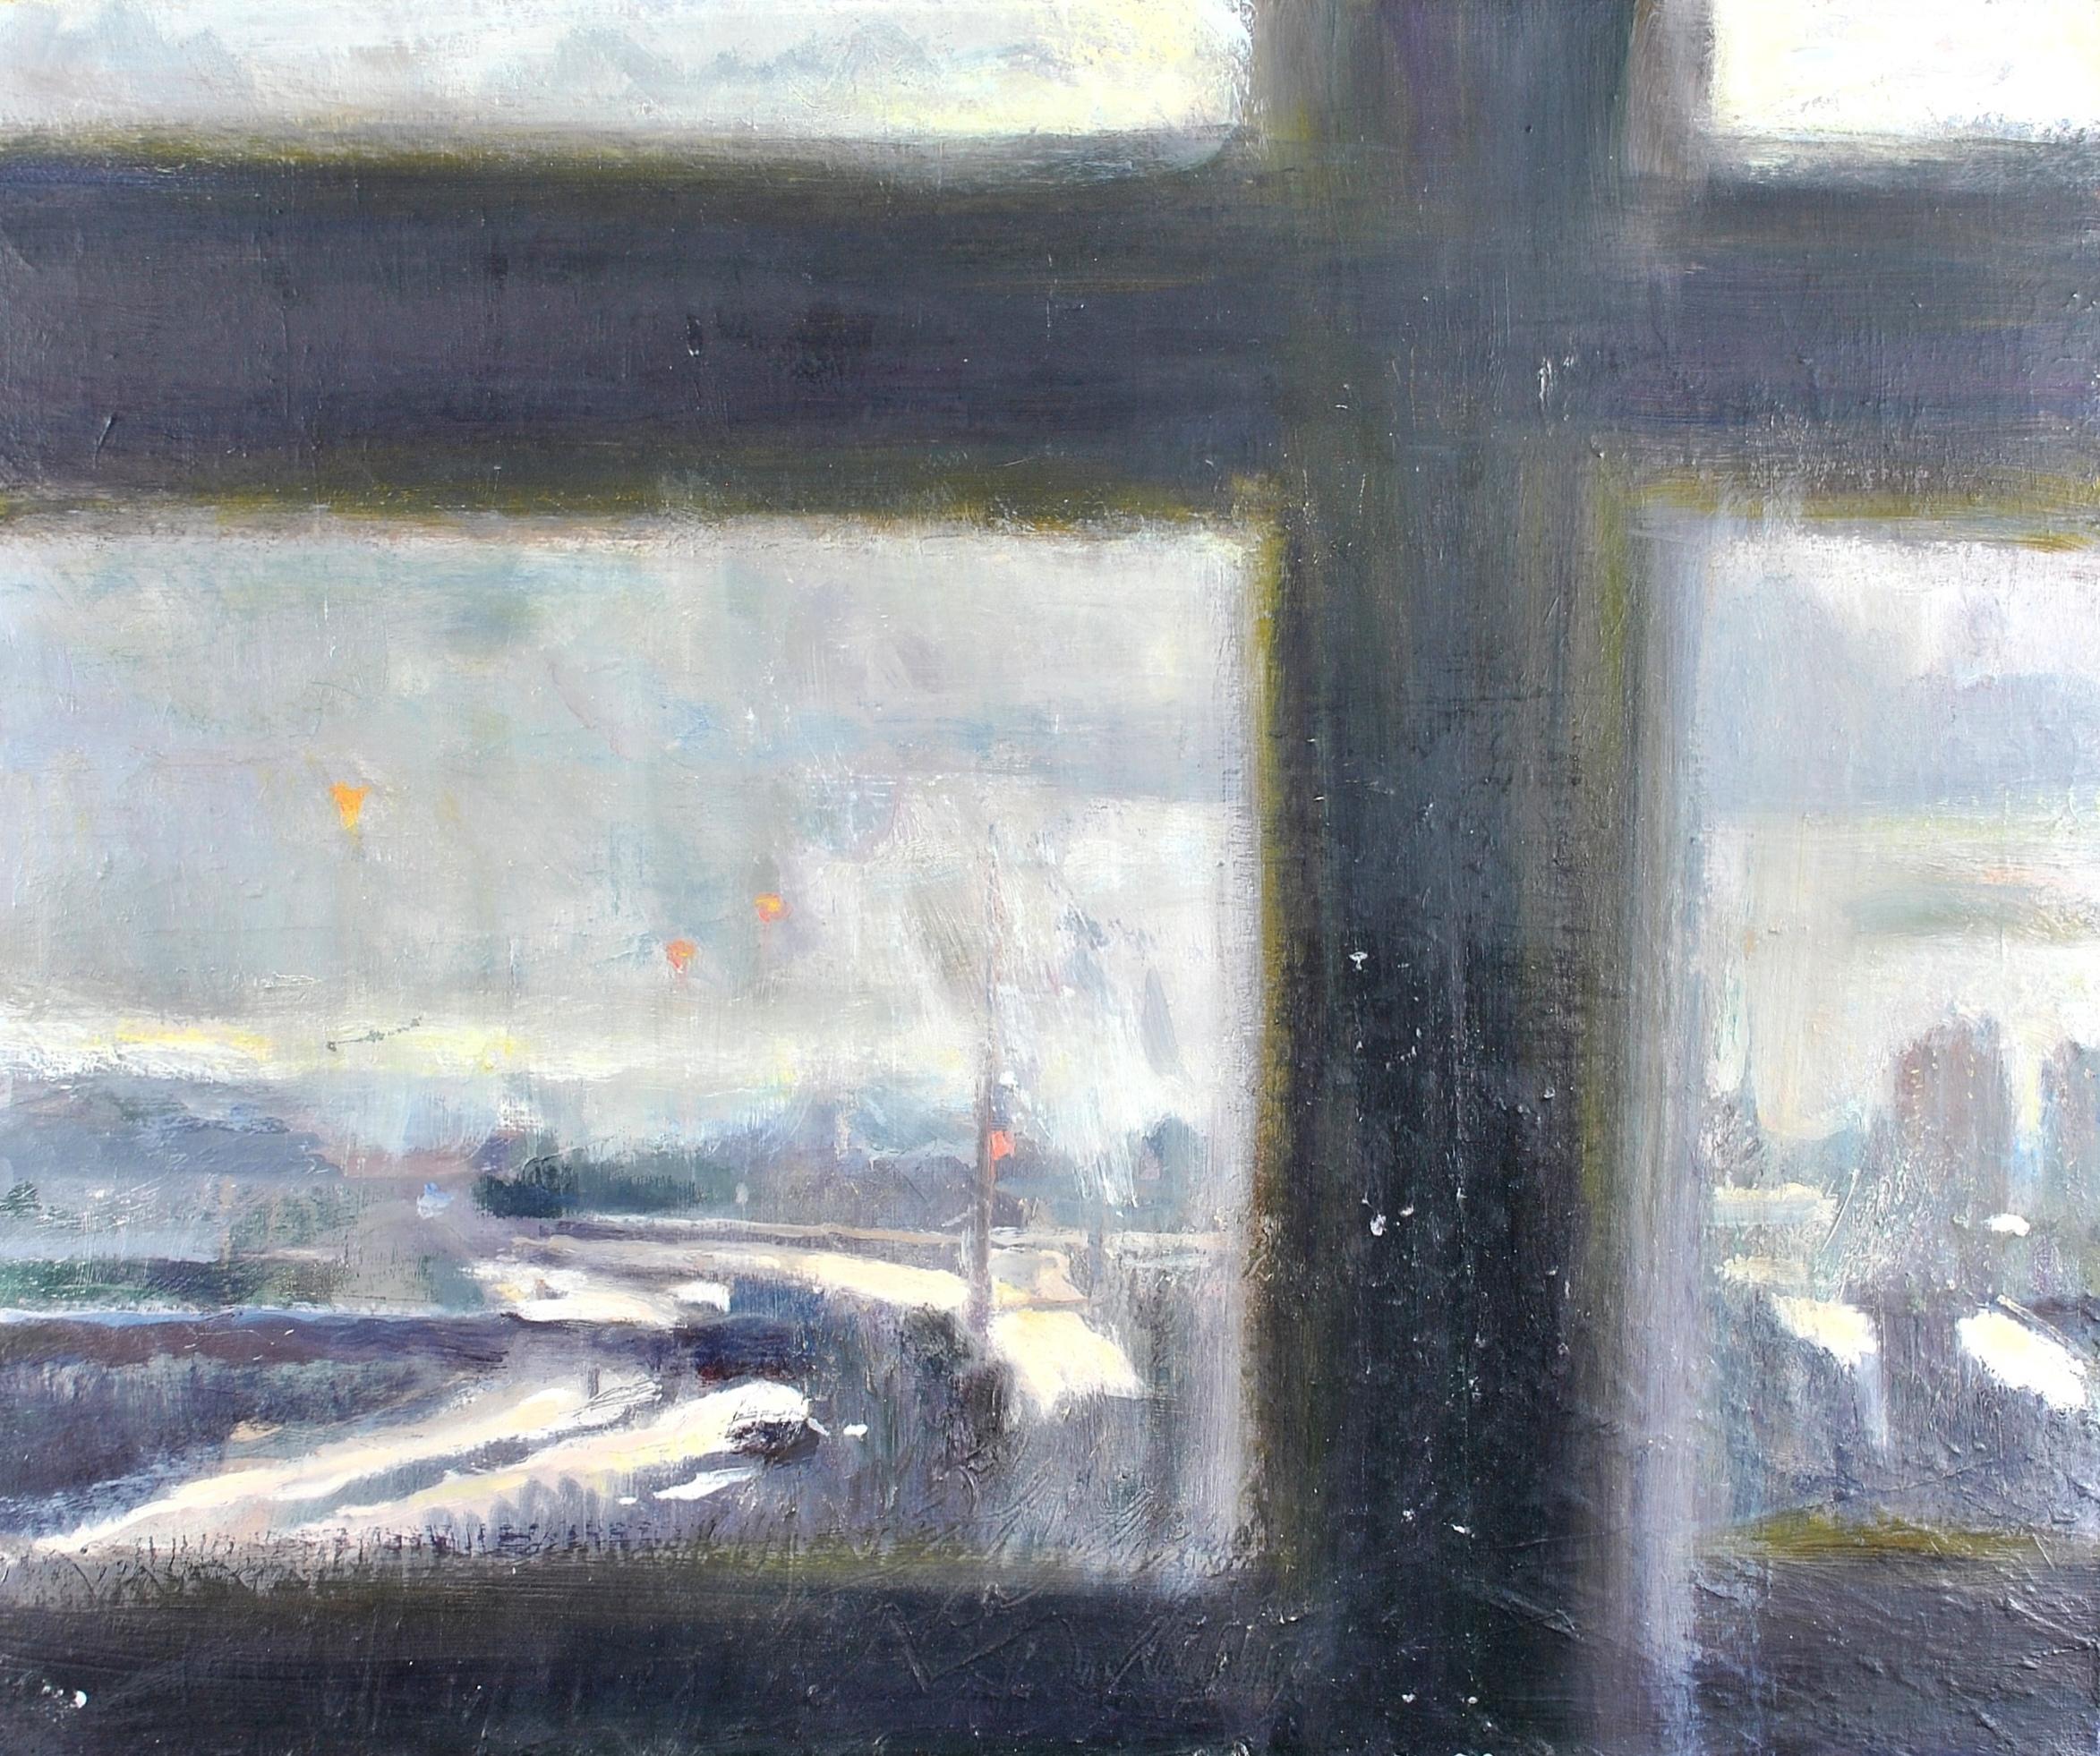 Belinda Gilbert Scott Landscape Painting - Vigil II - Snow Covered Winter Landscape Through Window Impressionist Painting